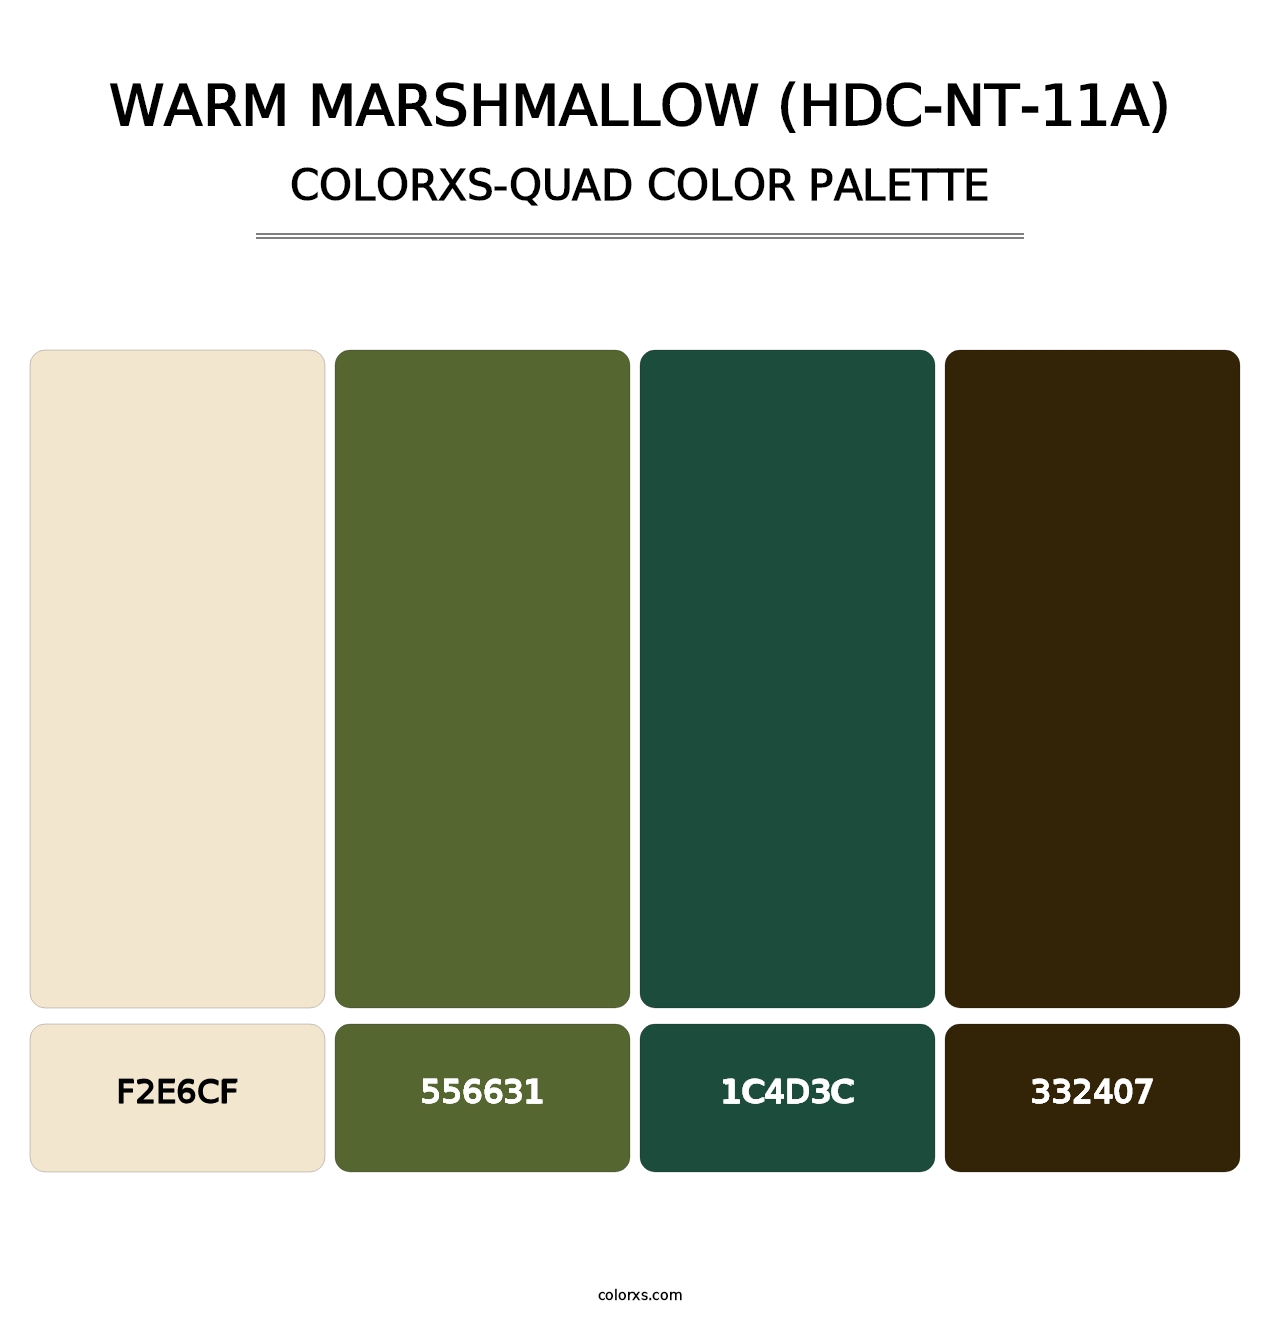 Warm Marshmallow (HDC-NT-11A) - Colorxs Quad Palette